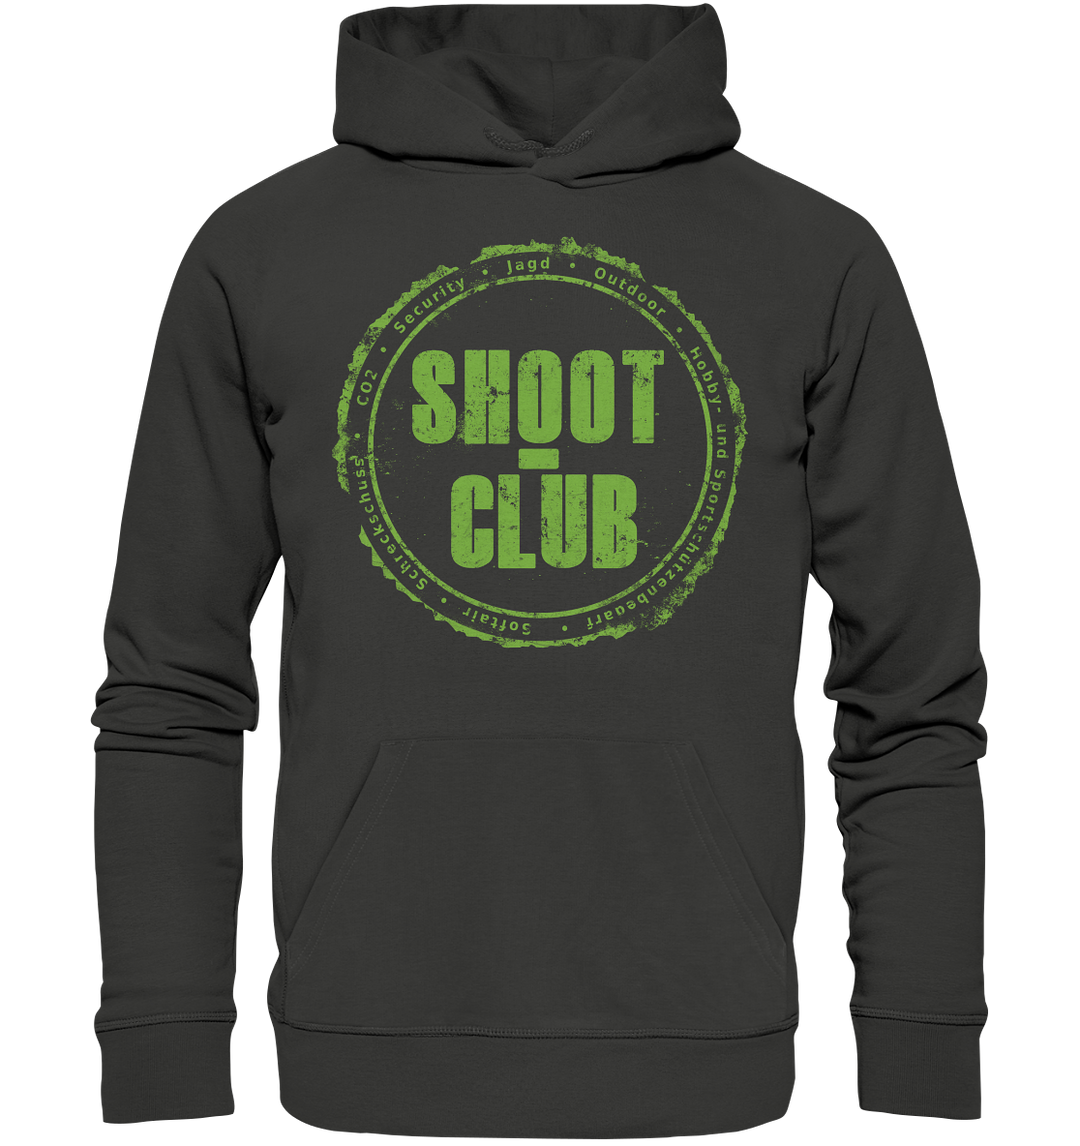 "Shoot Club Stamp" - Premium Unisex Hoodie